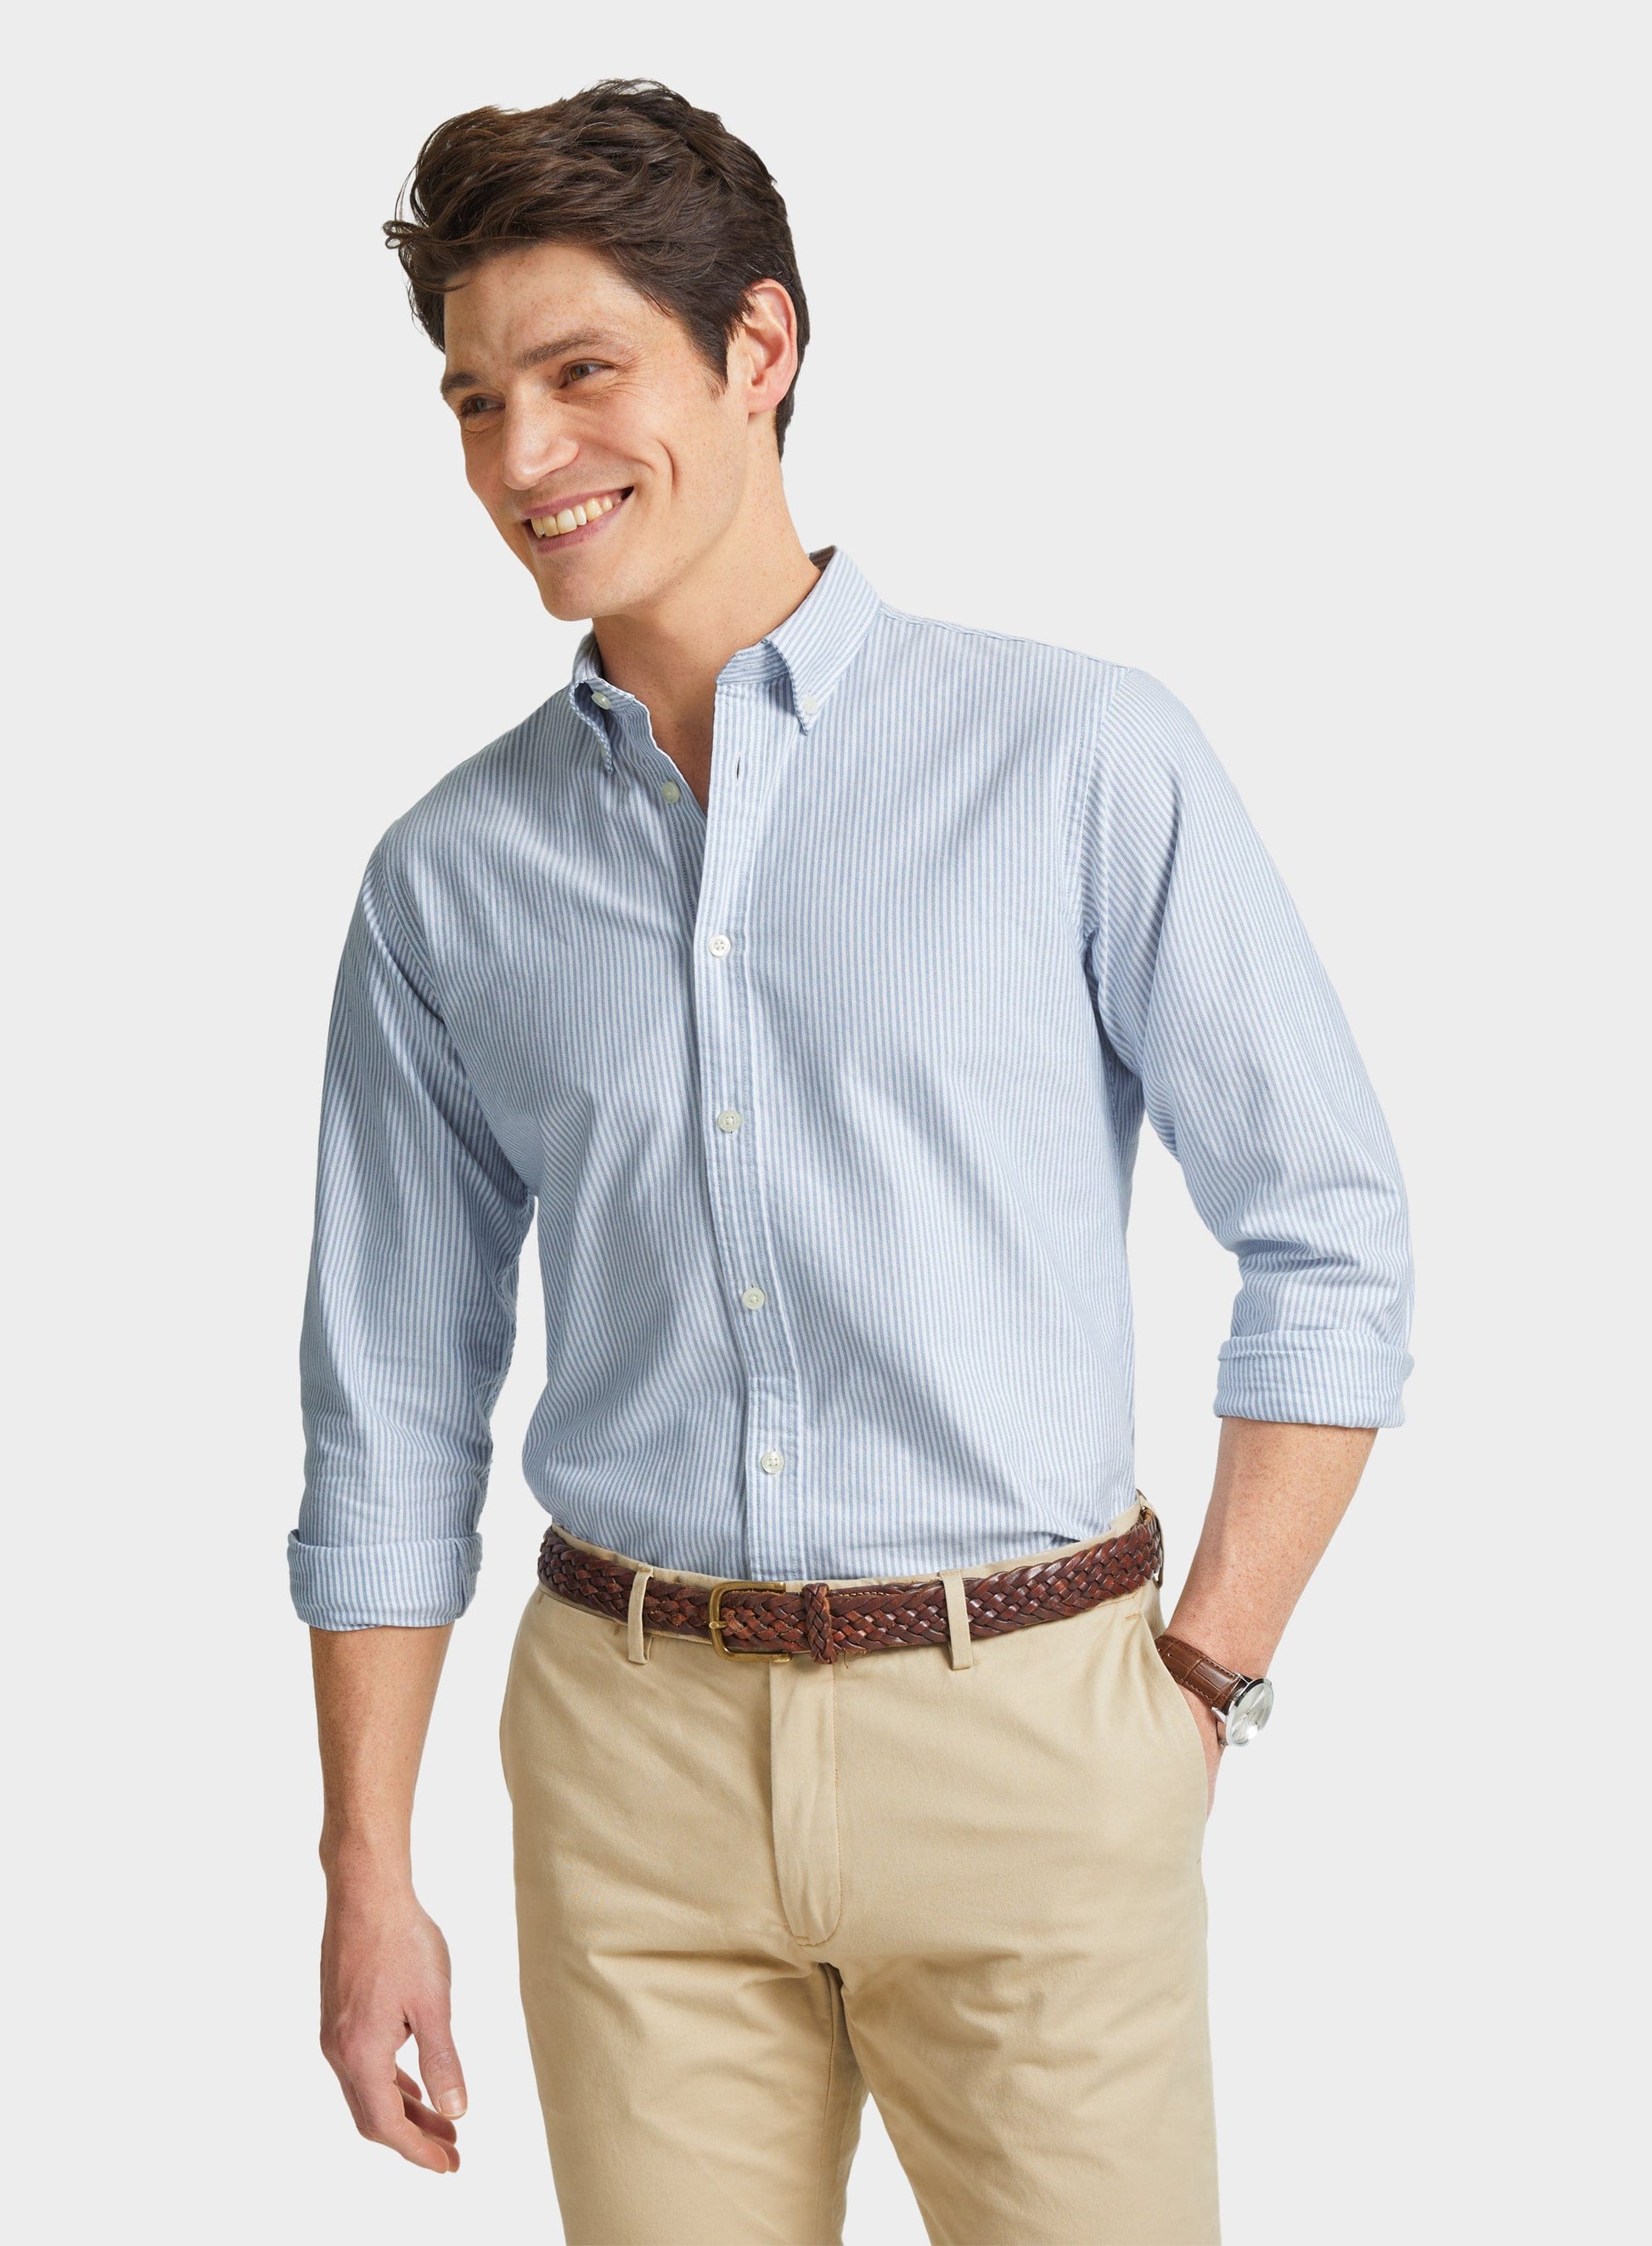 Mens Button Down Oxford Shirt in Blue Stripe - Oxford Shirt Co.